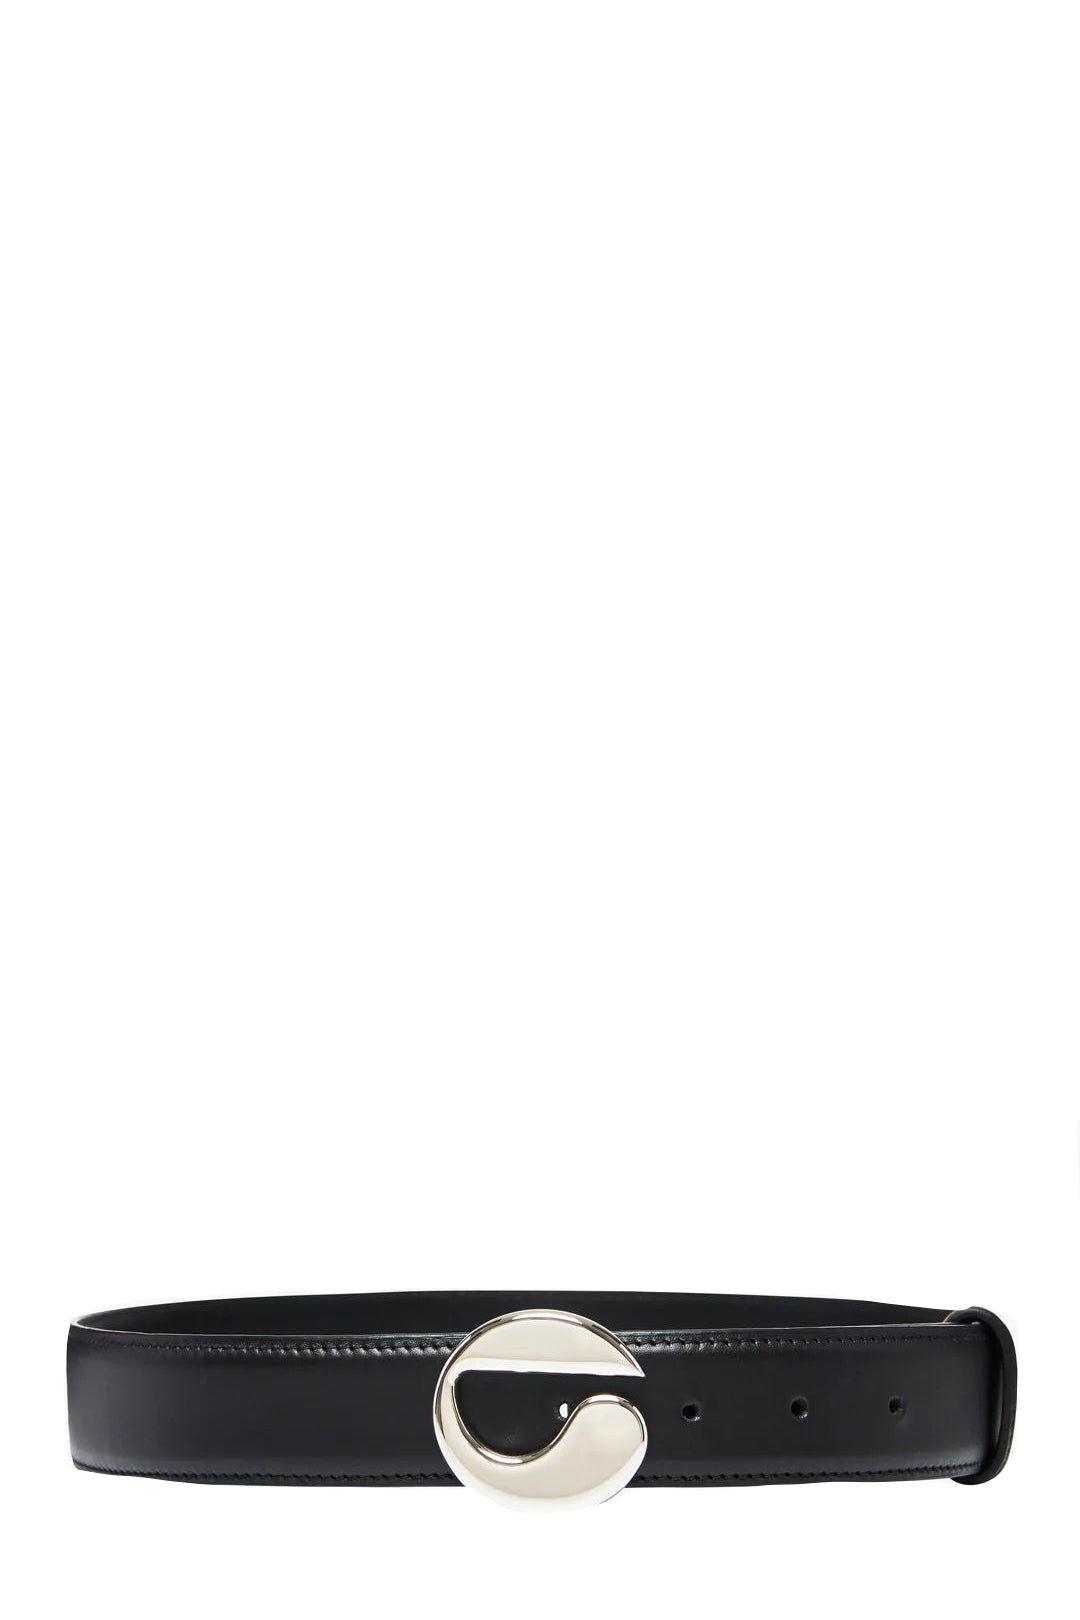 Callaway Signature Chev Logo Printed Belt - Caviar